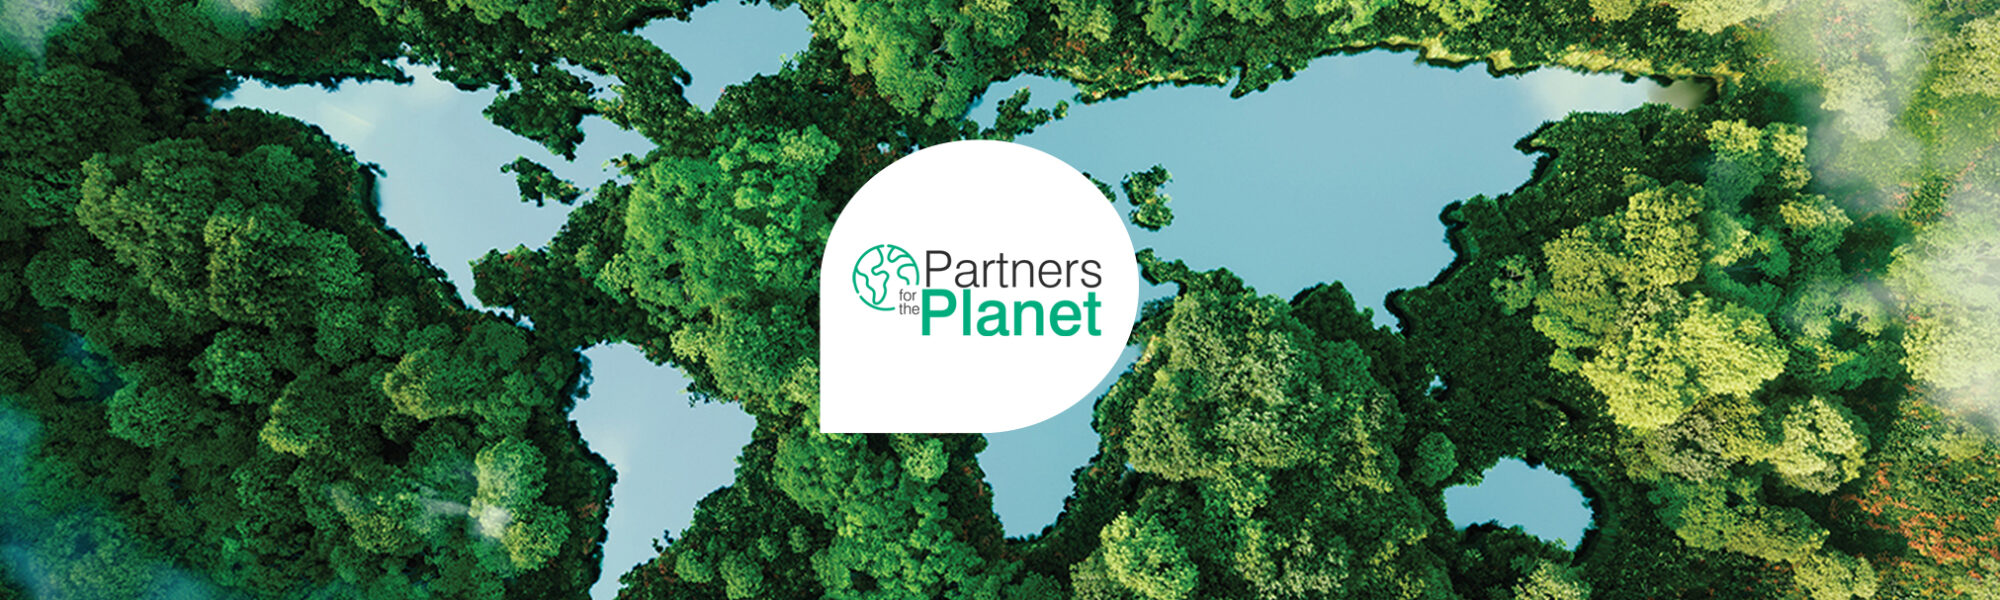 Partners planet